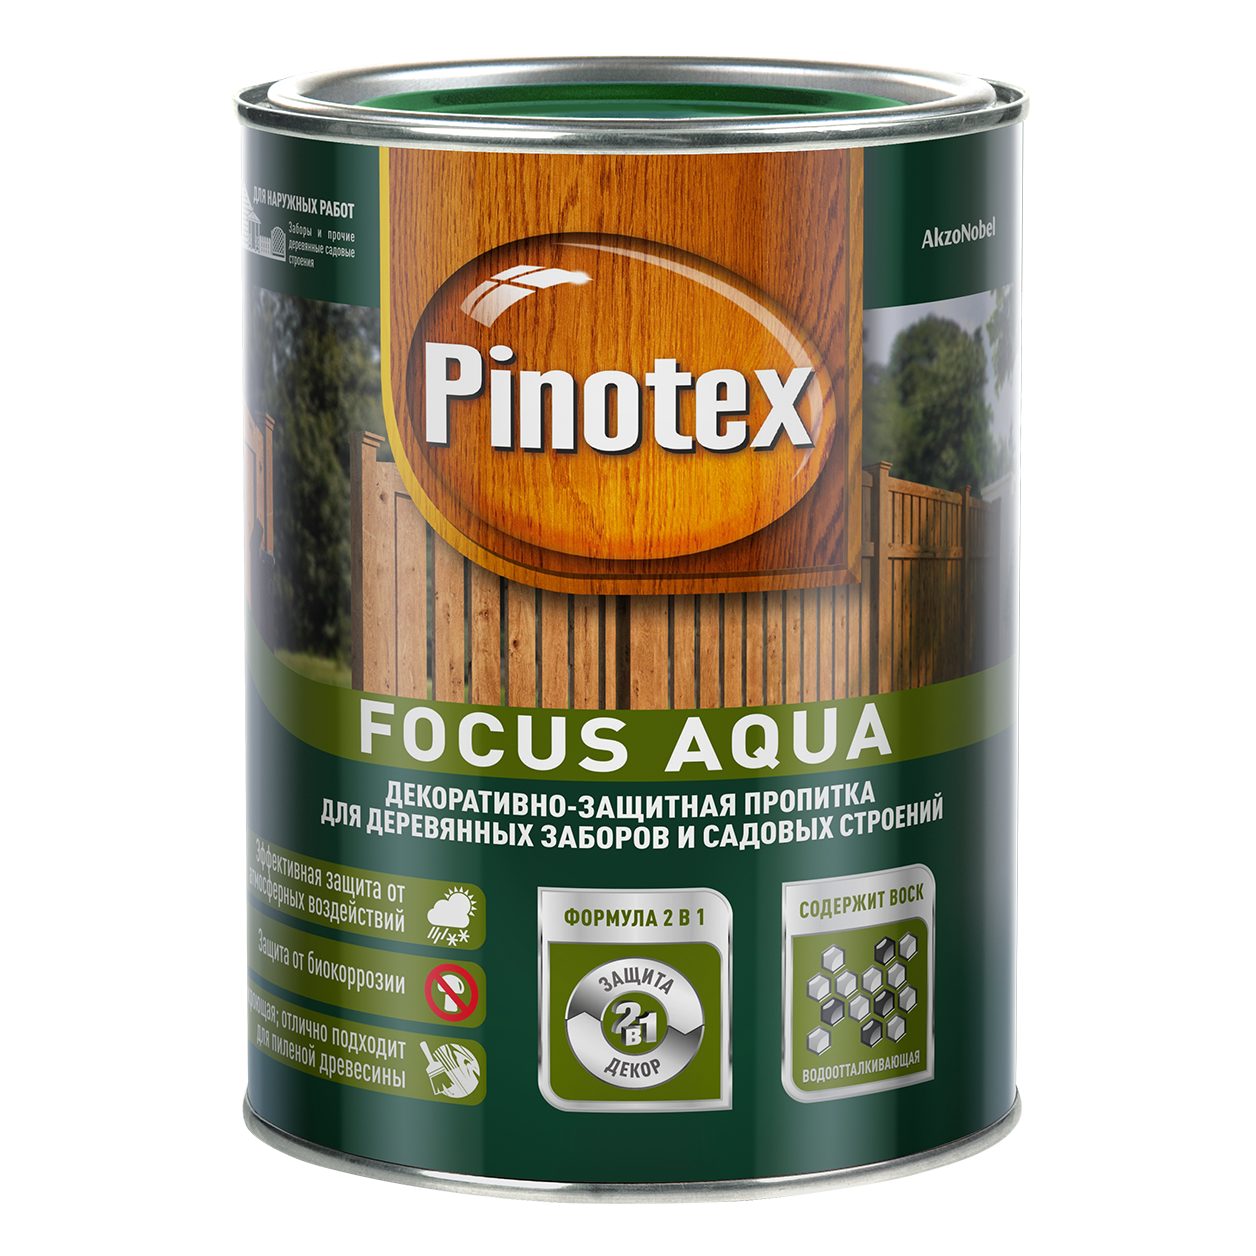 Pinotex Focus Aqua, Орех, 2,5л., декоративно-защитная пропитка